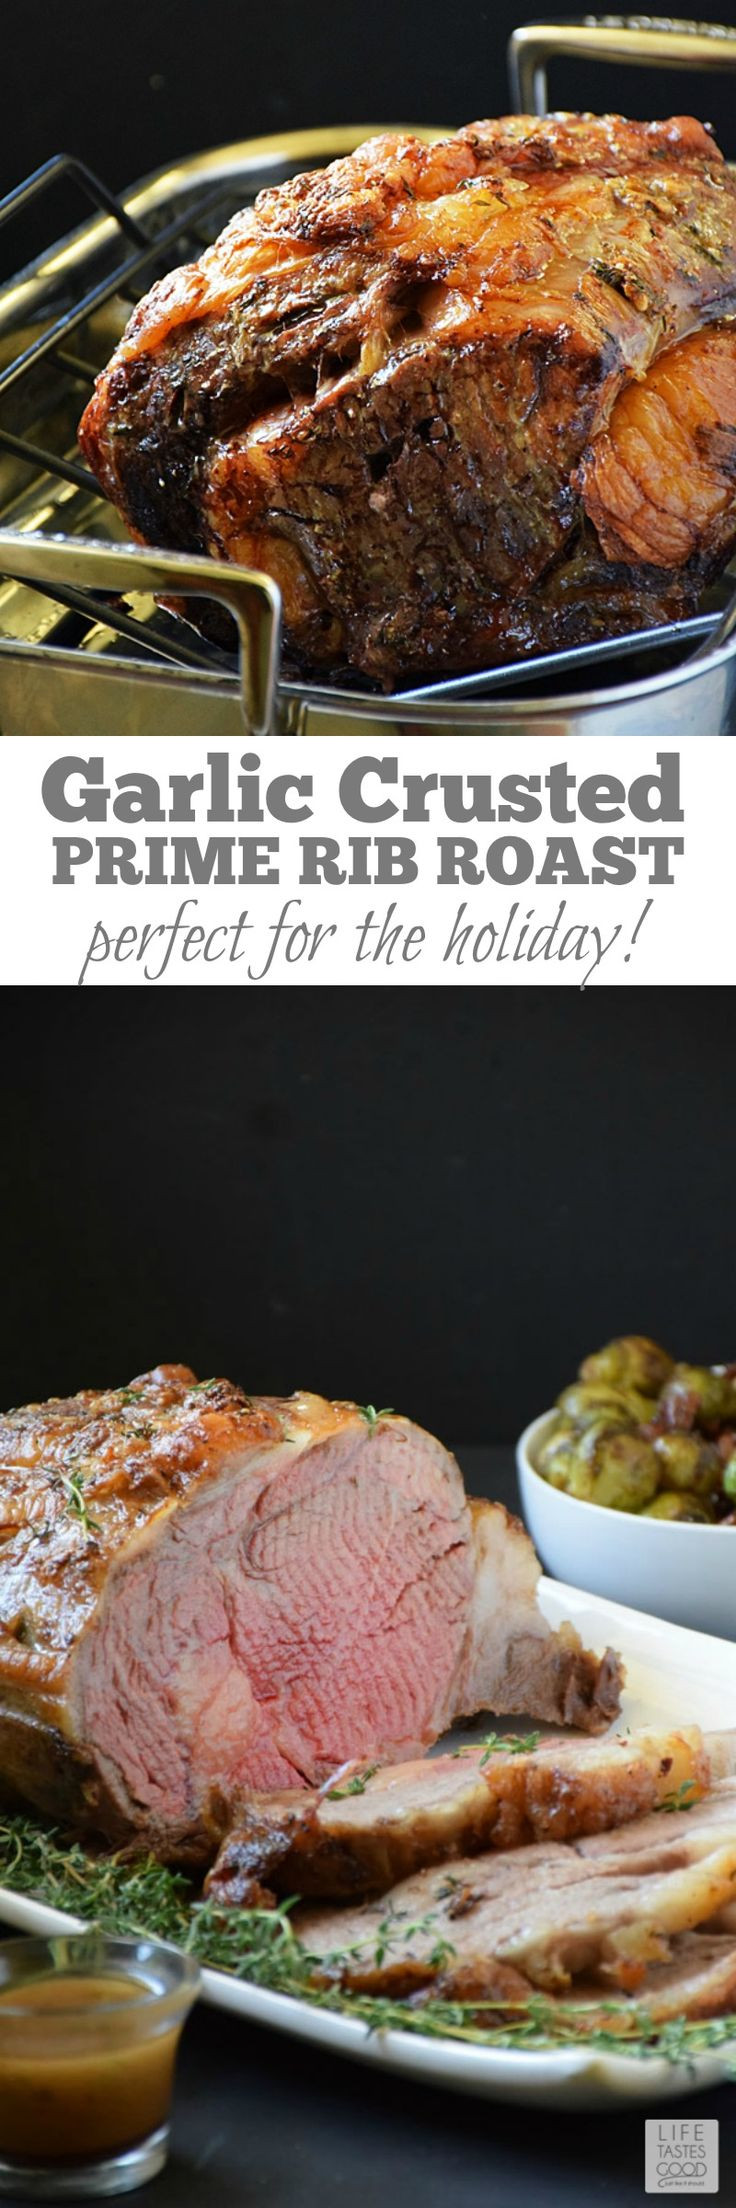 Prime Rib Christmas Dinner Menu
 Best 25 Xmas dinner ideas ideas on Pinterest